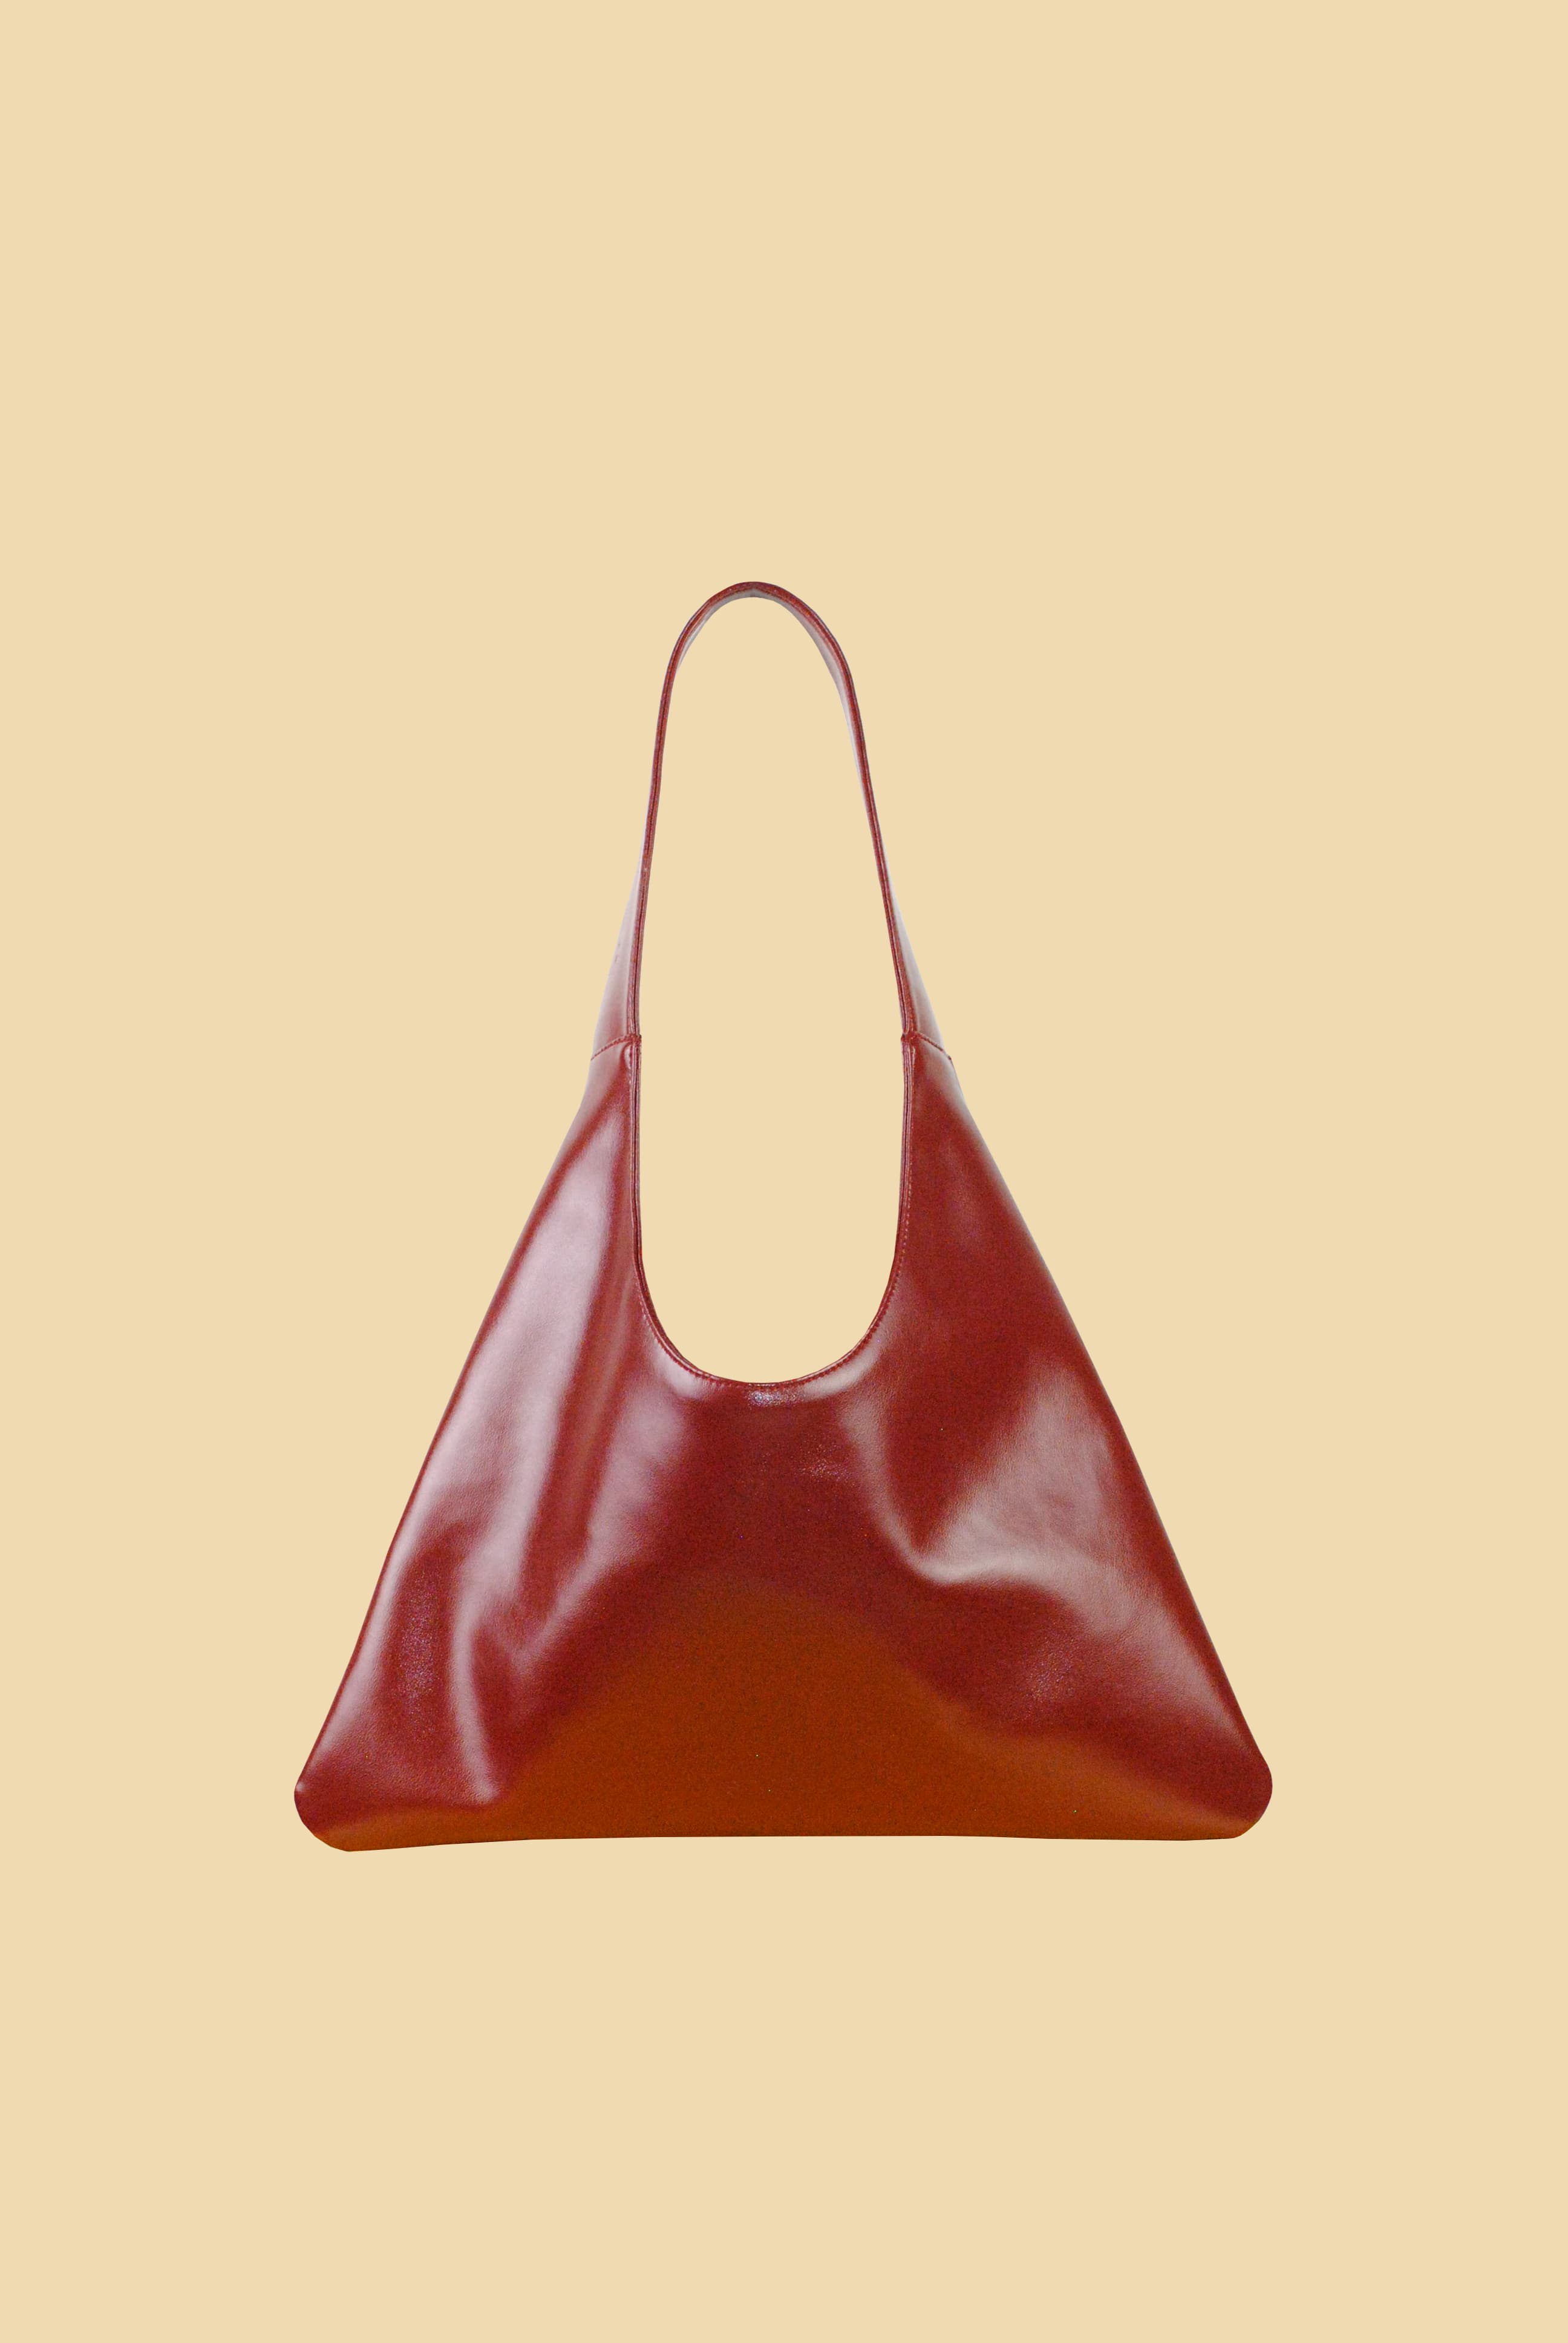 Agave Triangular Tote | Burgundy Red